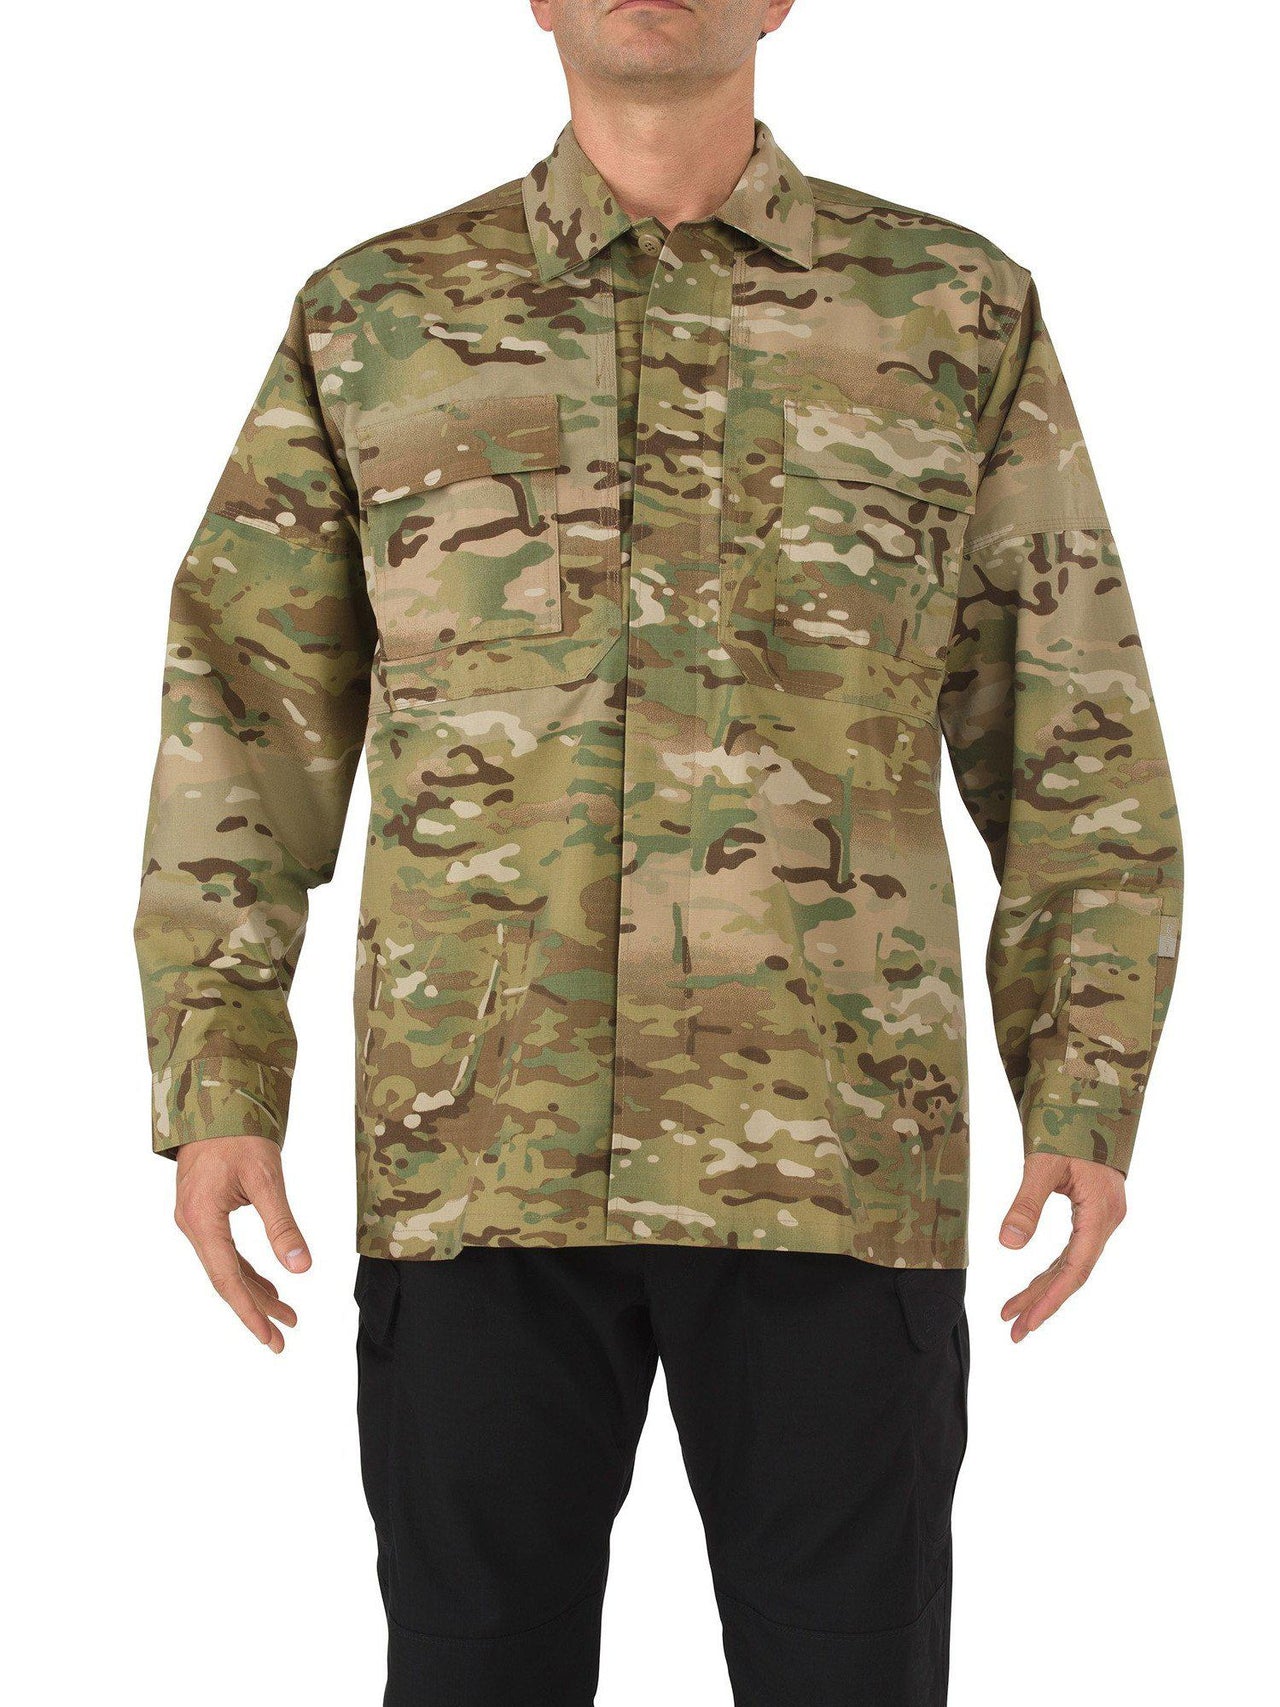 5.11 Tactical TDU Long Sleeve Shirt - MultiCam - TacSource